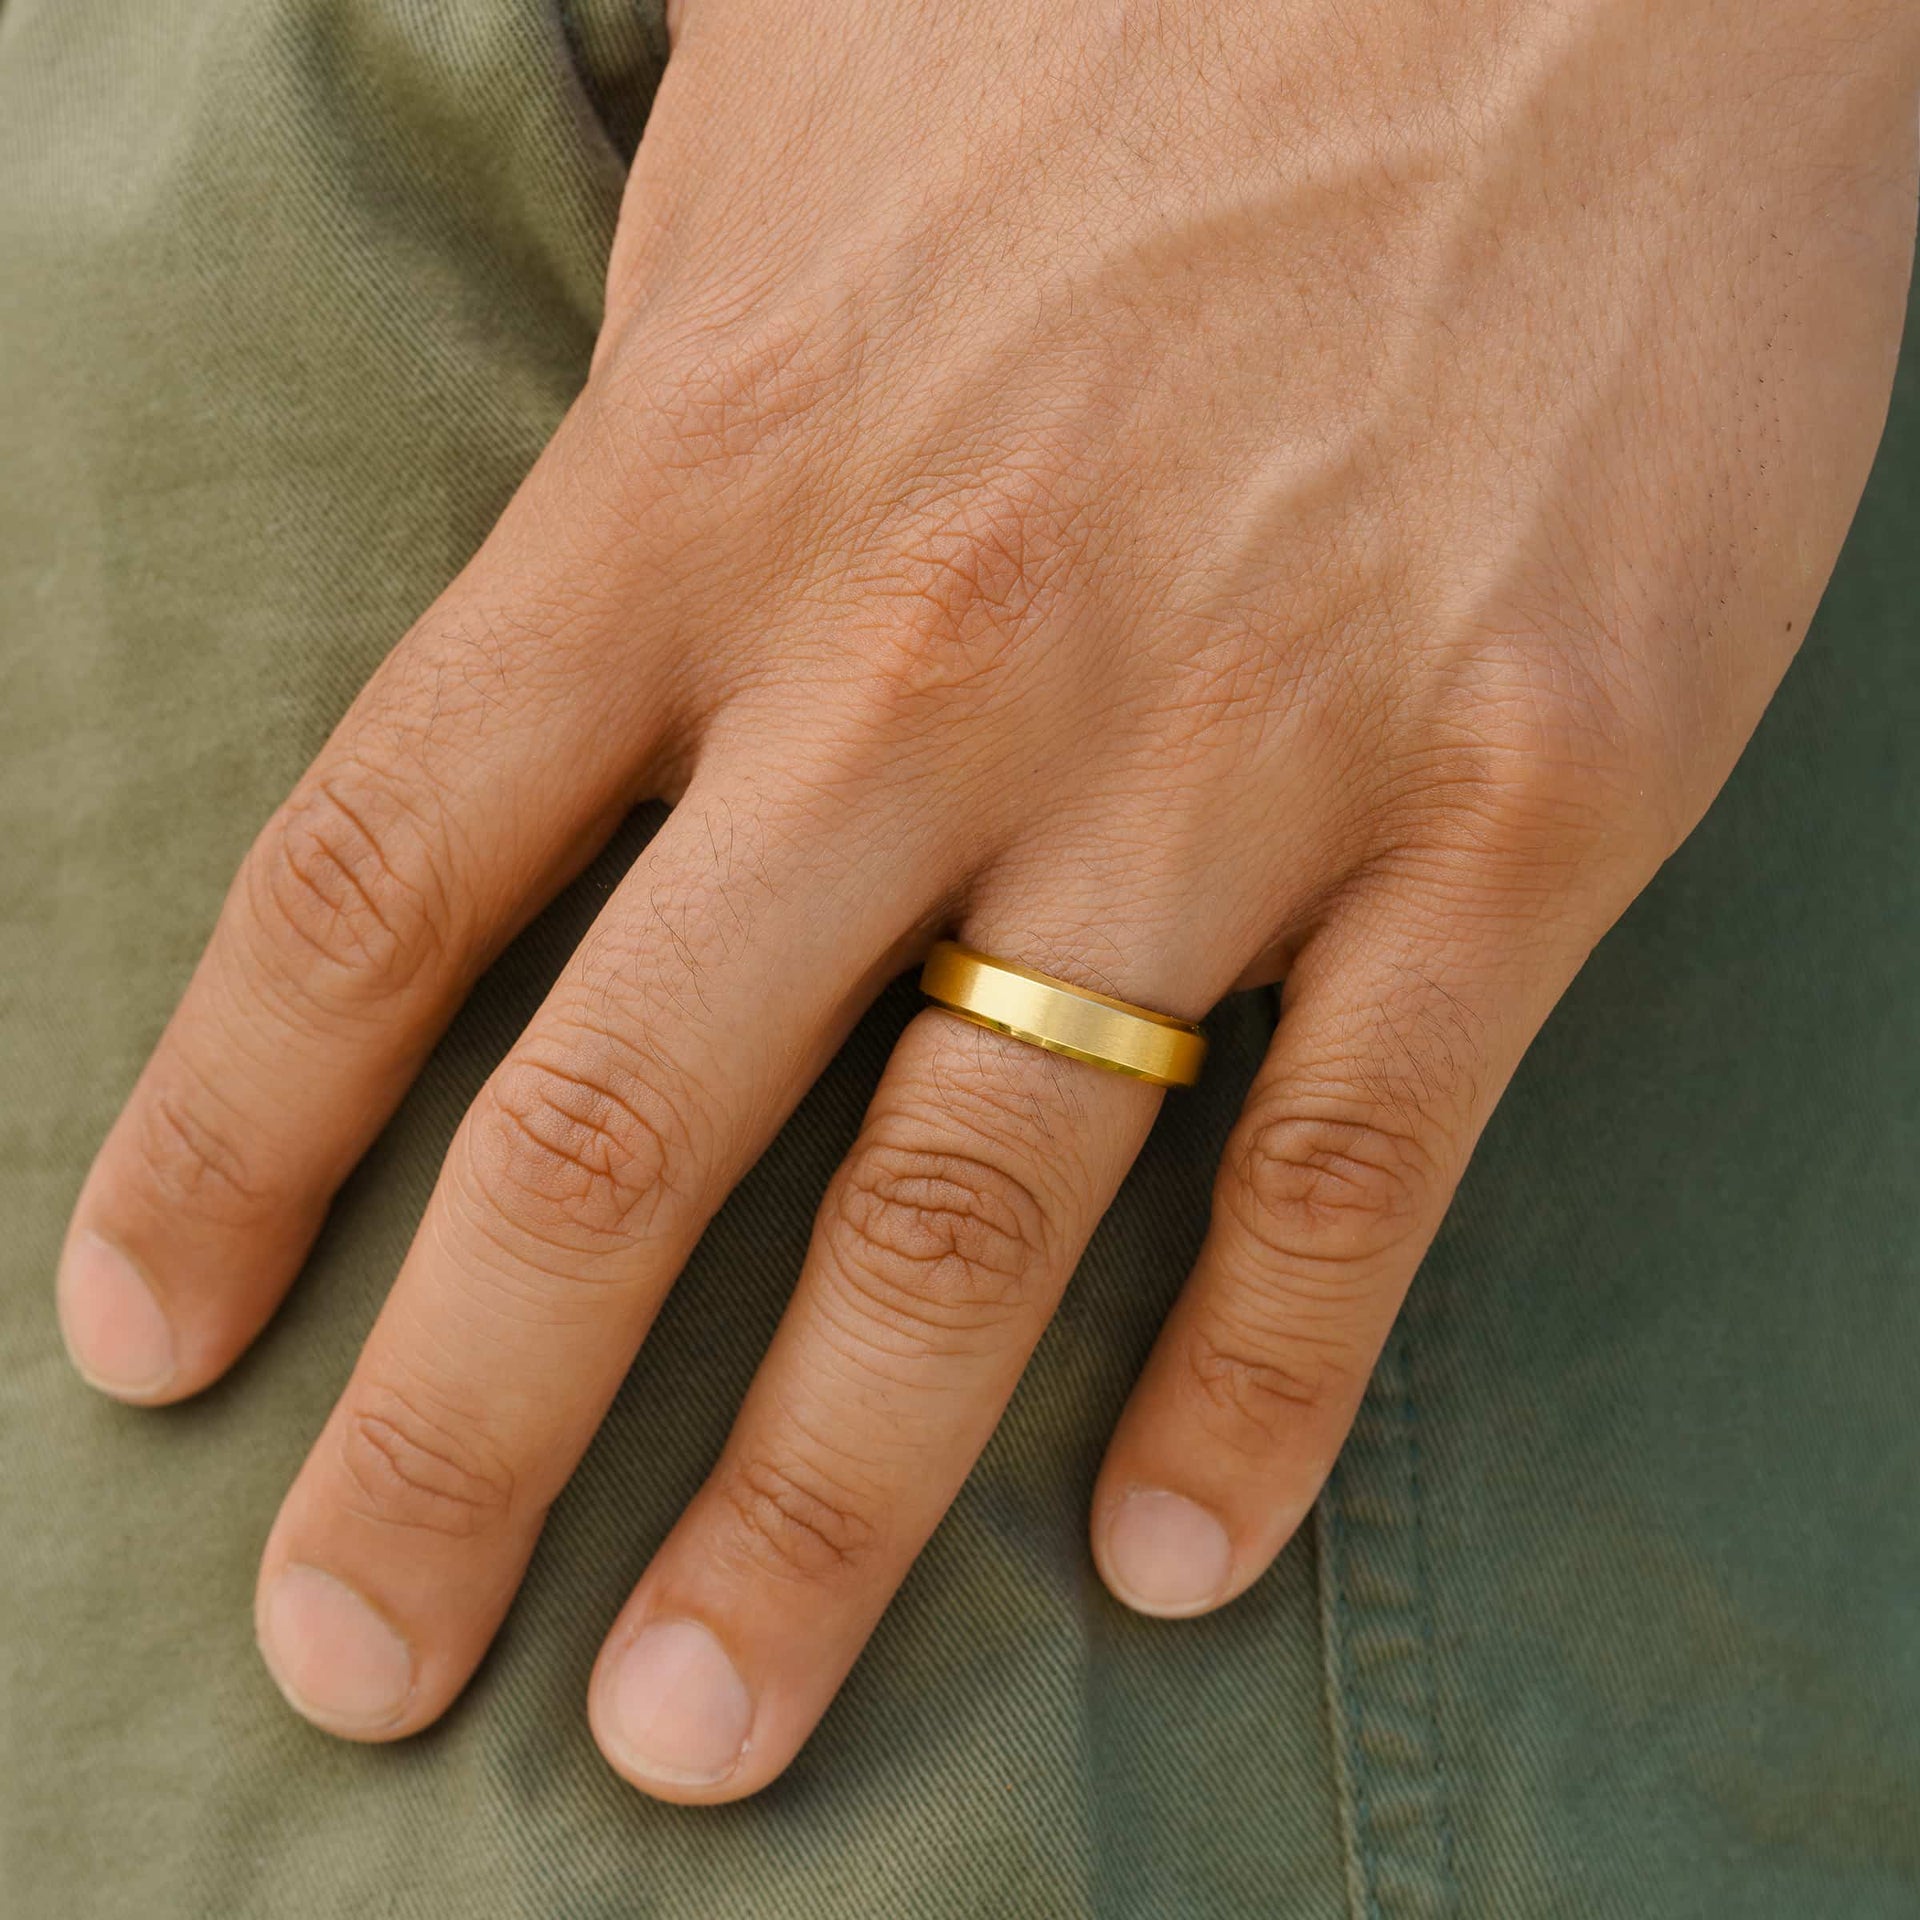 man wearing sleek gold wedding band with green pants